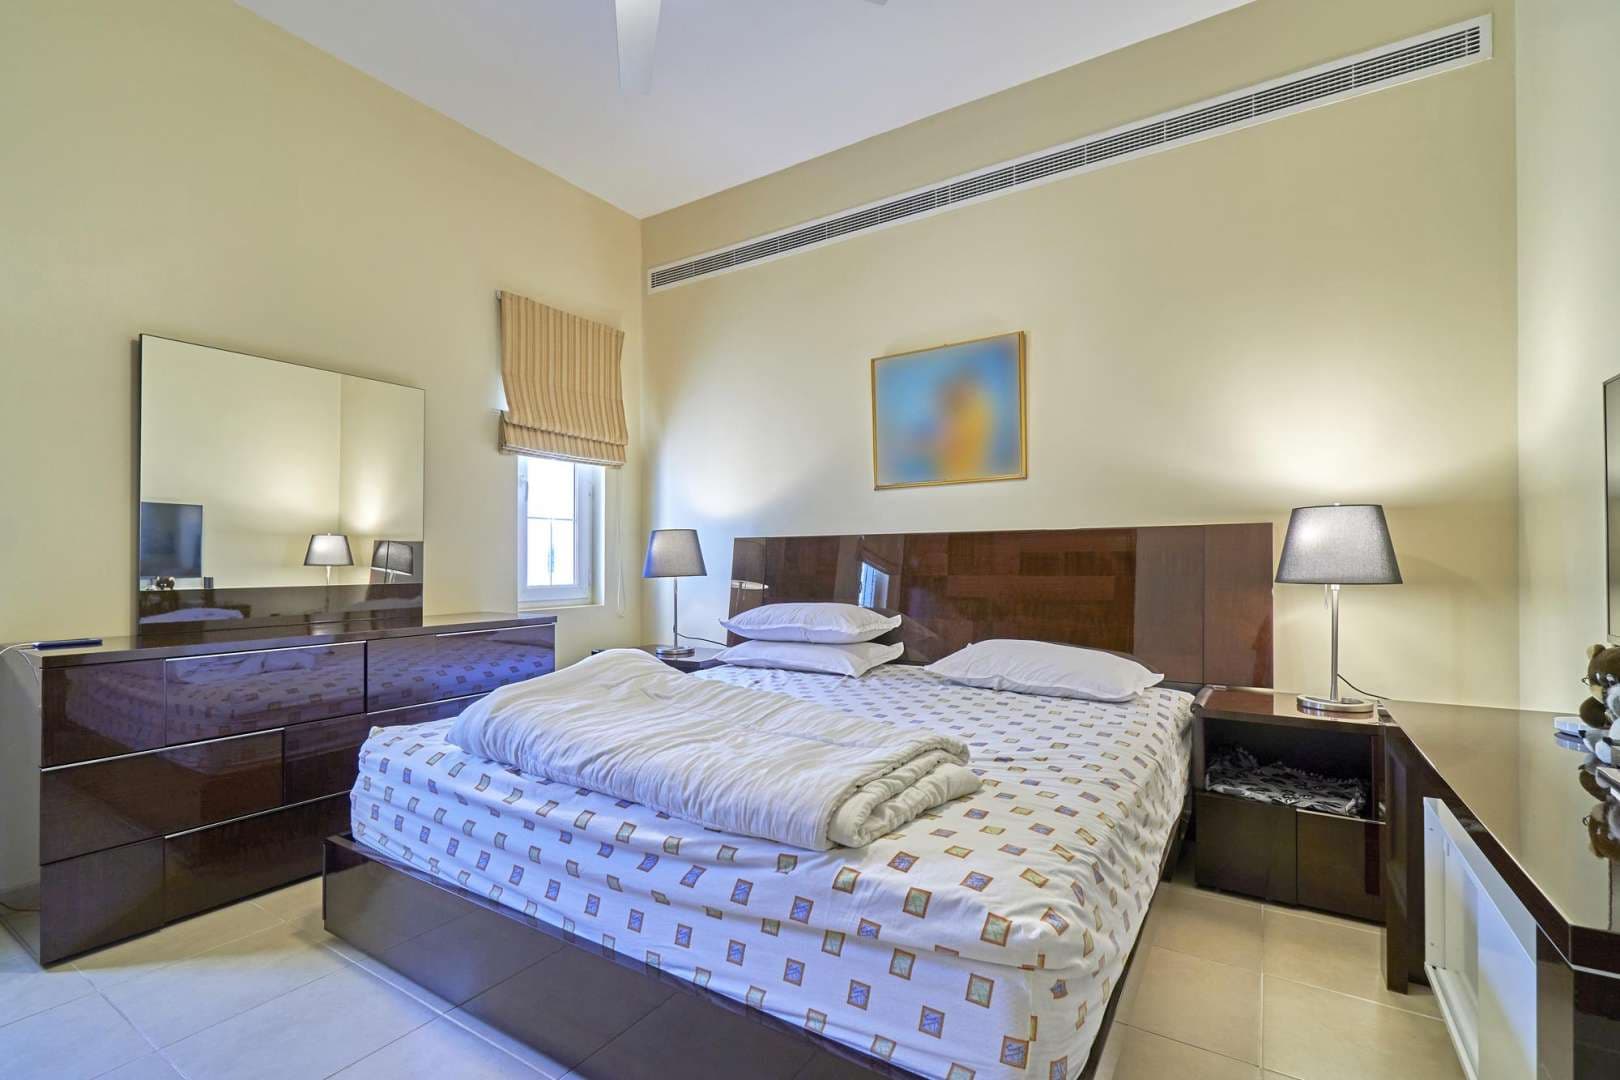  Bedroom Villa For Sale Alvorada Lp05842 Aa5947858e0ca80.jpg